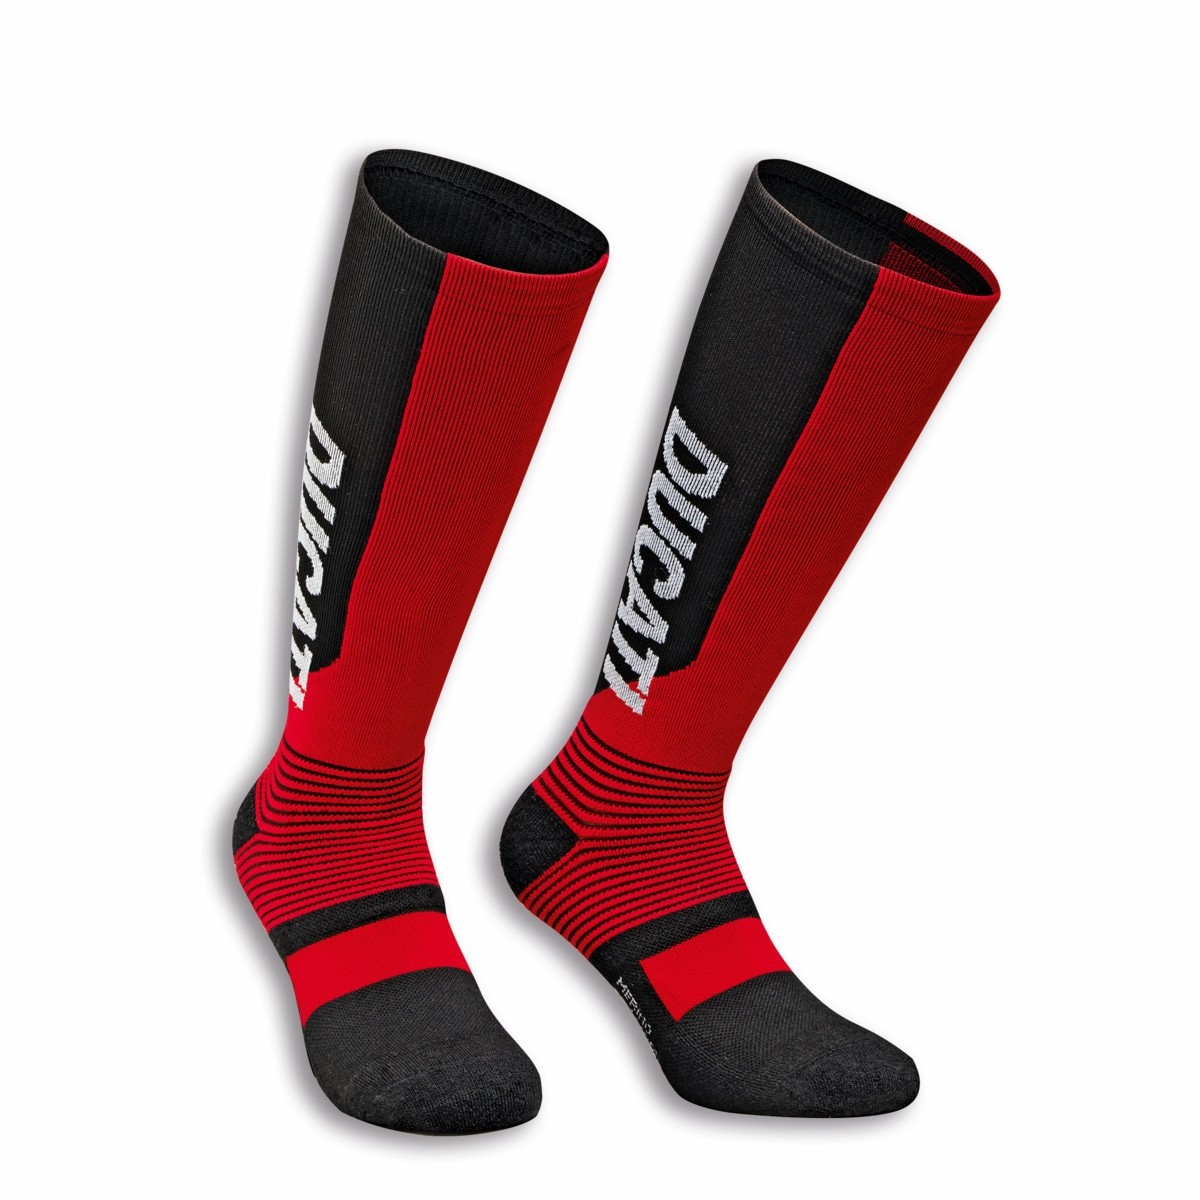 Warm Up 2 - Tech socks